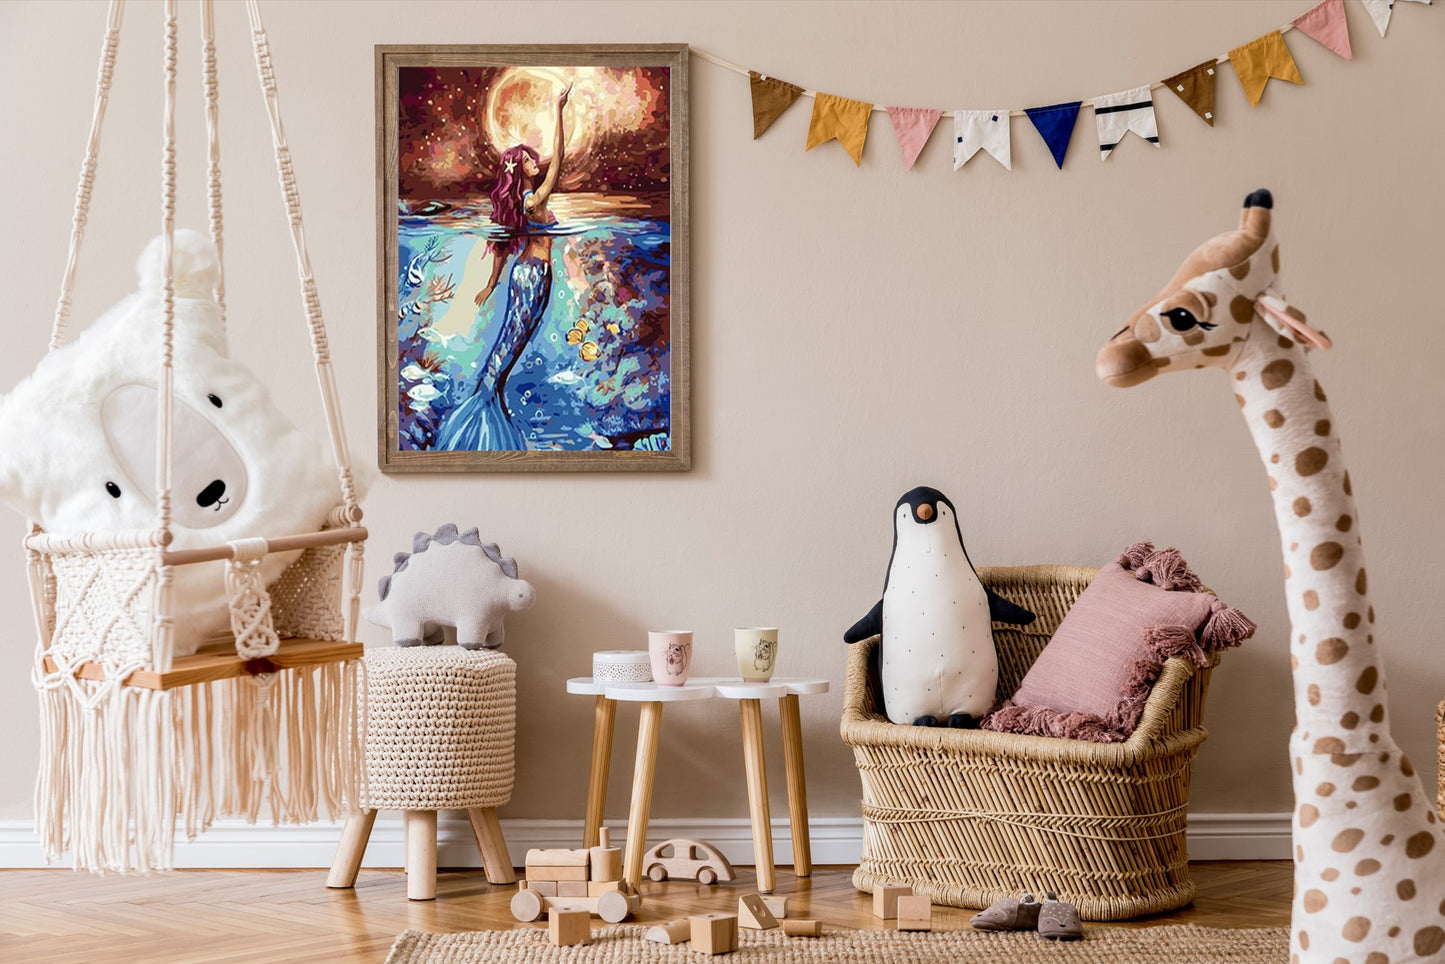 Malen nach Zahlen Erwachsene Meerjungfrau 40x50 cm Paint by Numbers DIY Öl Acryl Leinwand Bild Dekoration Mermaid 1 Stück